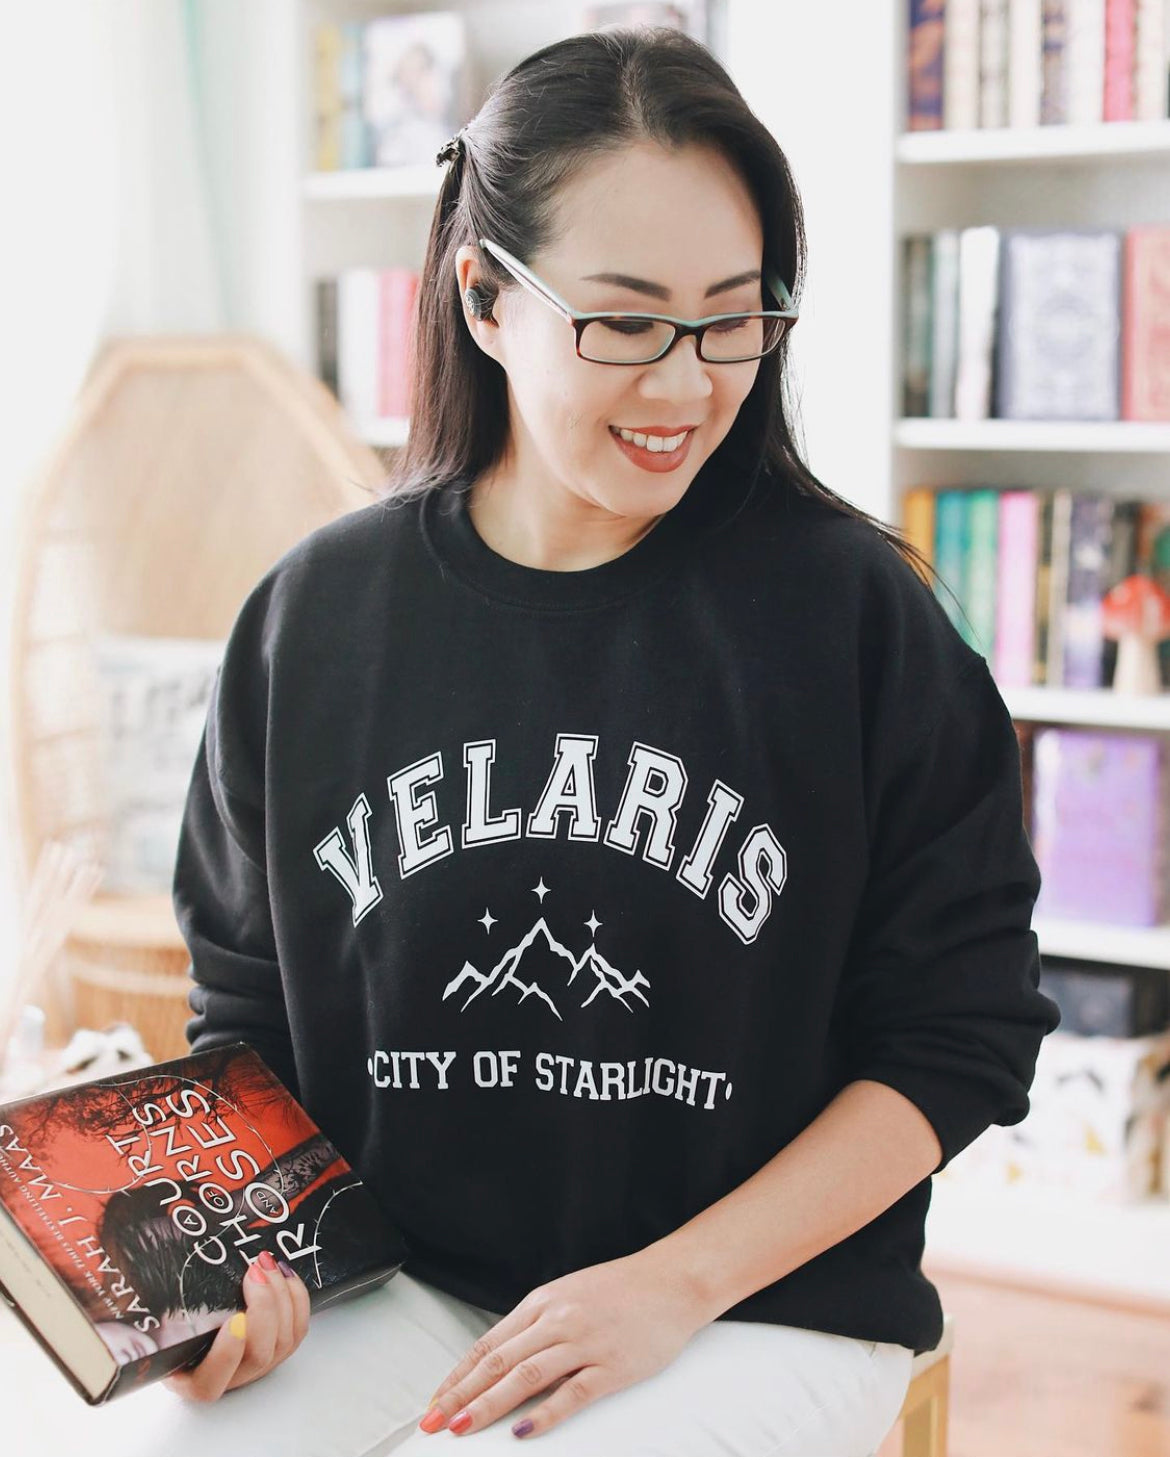 Velaris - The City of Starlight Sweatshirt | ACOTAR